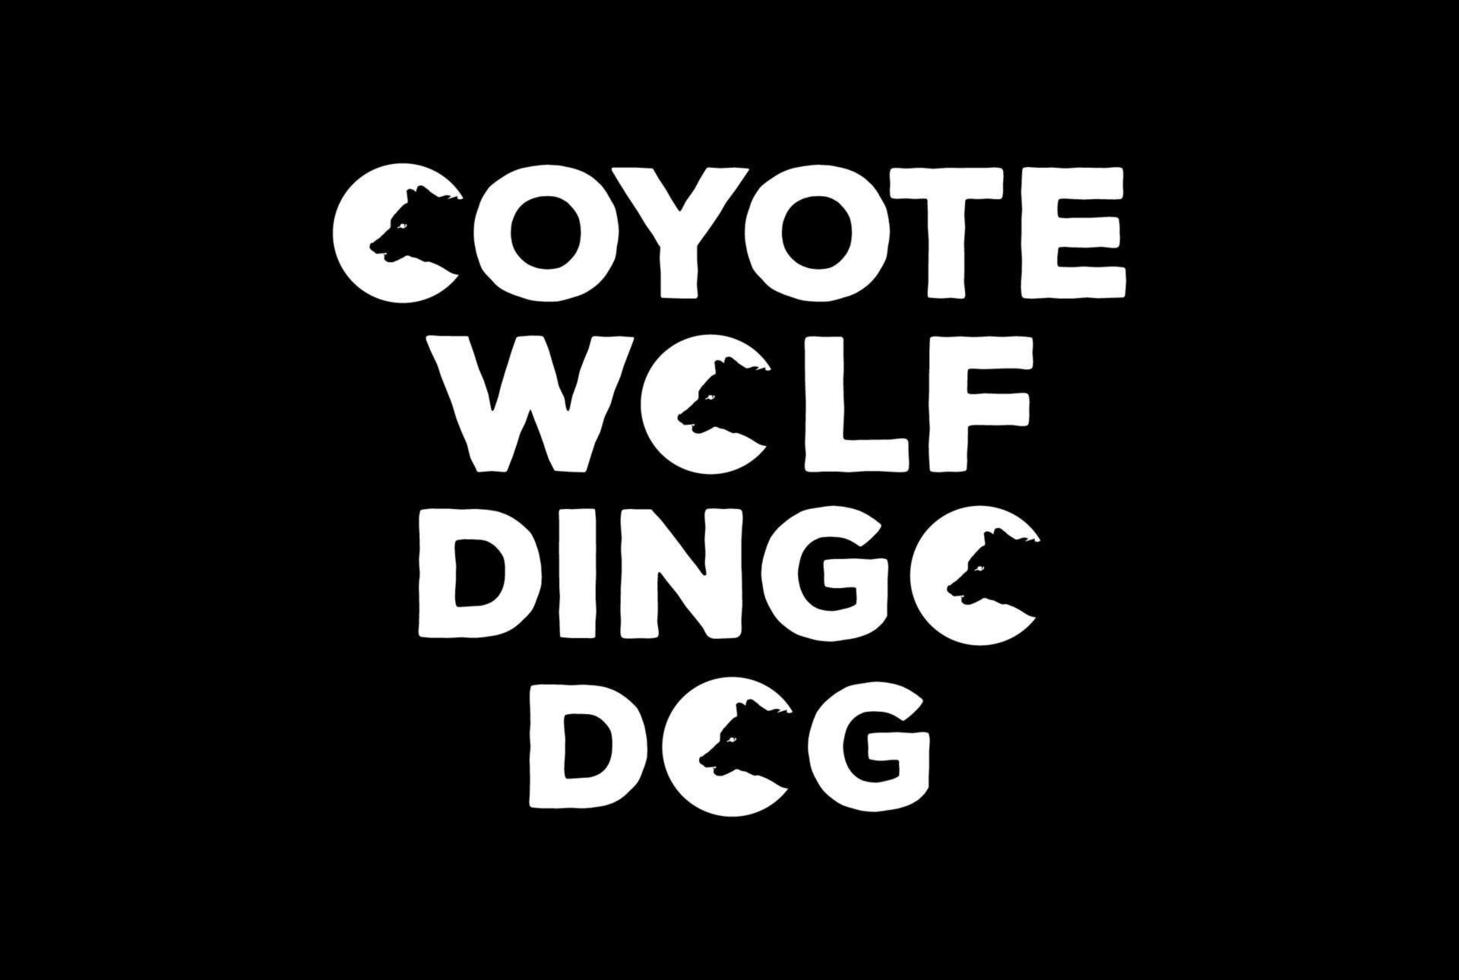 coyote wolf dingo hund text typ ord teckensnitt typografi logotyp design vektor